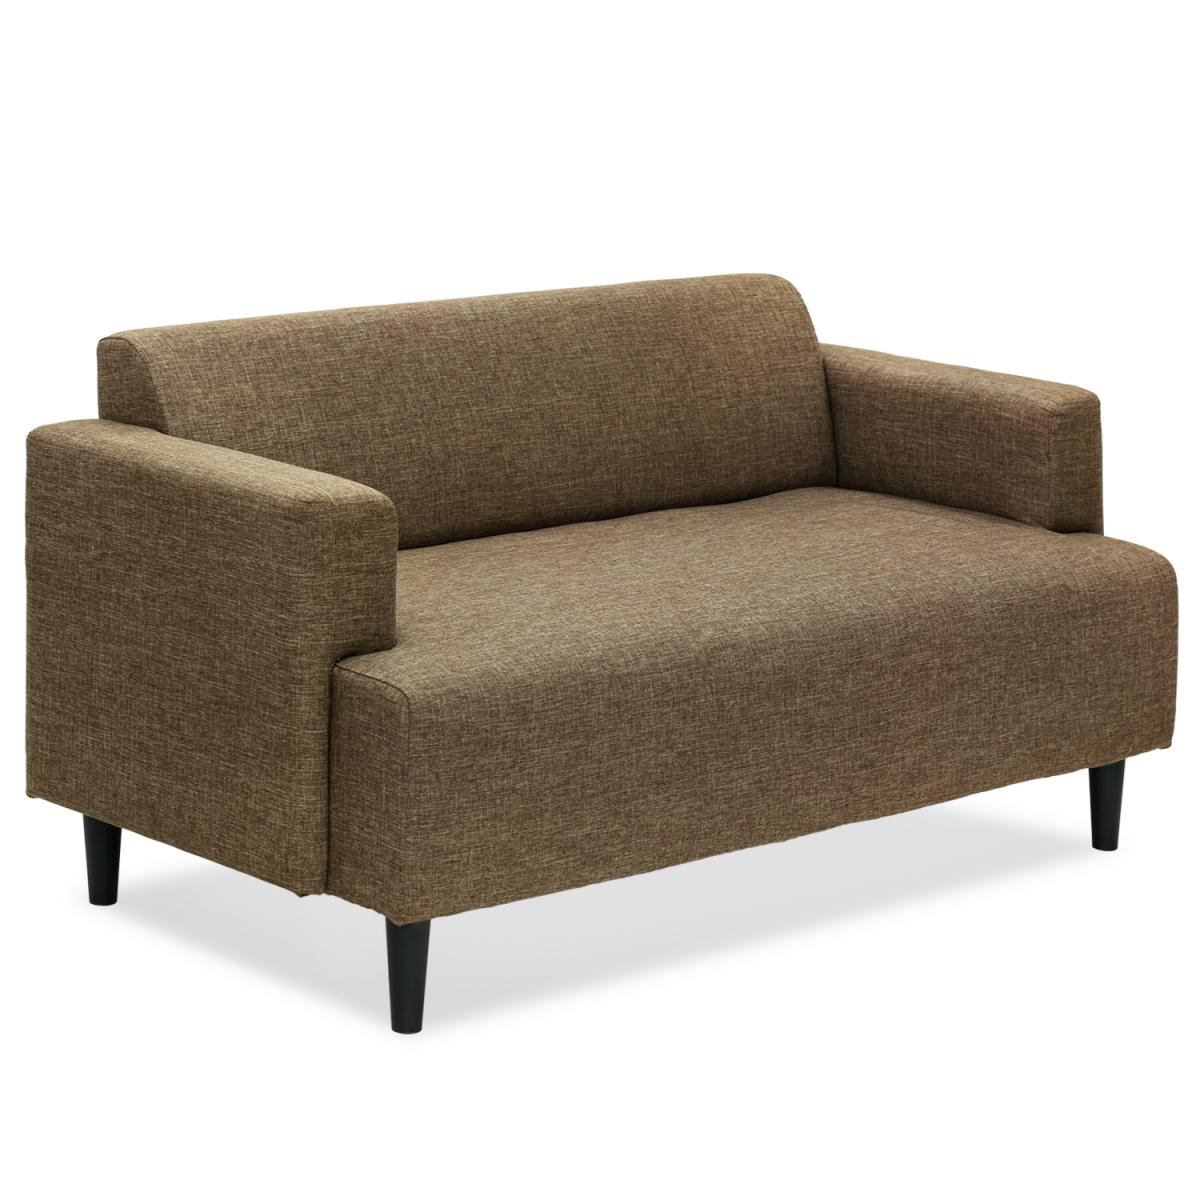 Sf808br Simply Home Modern Fabric Sofa, Brown